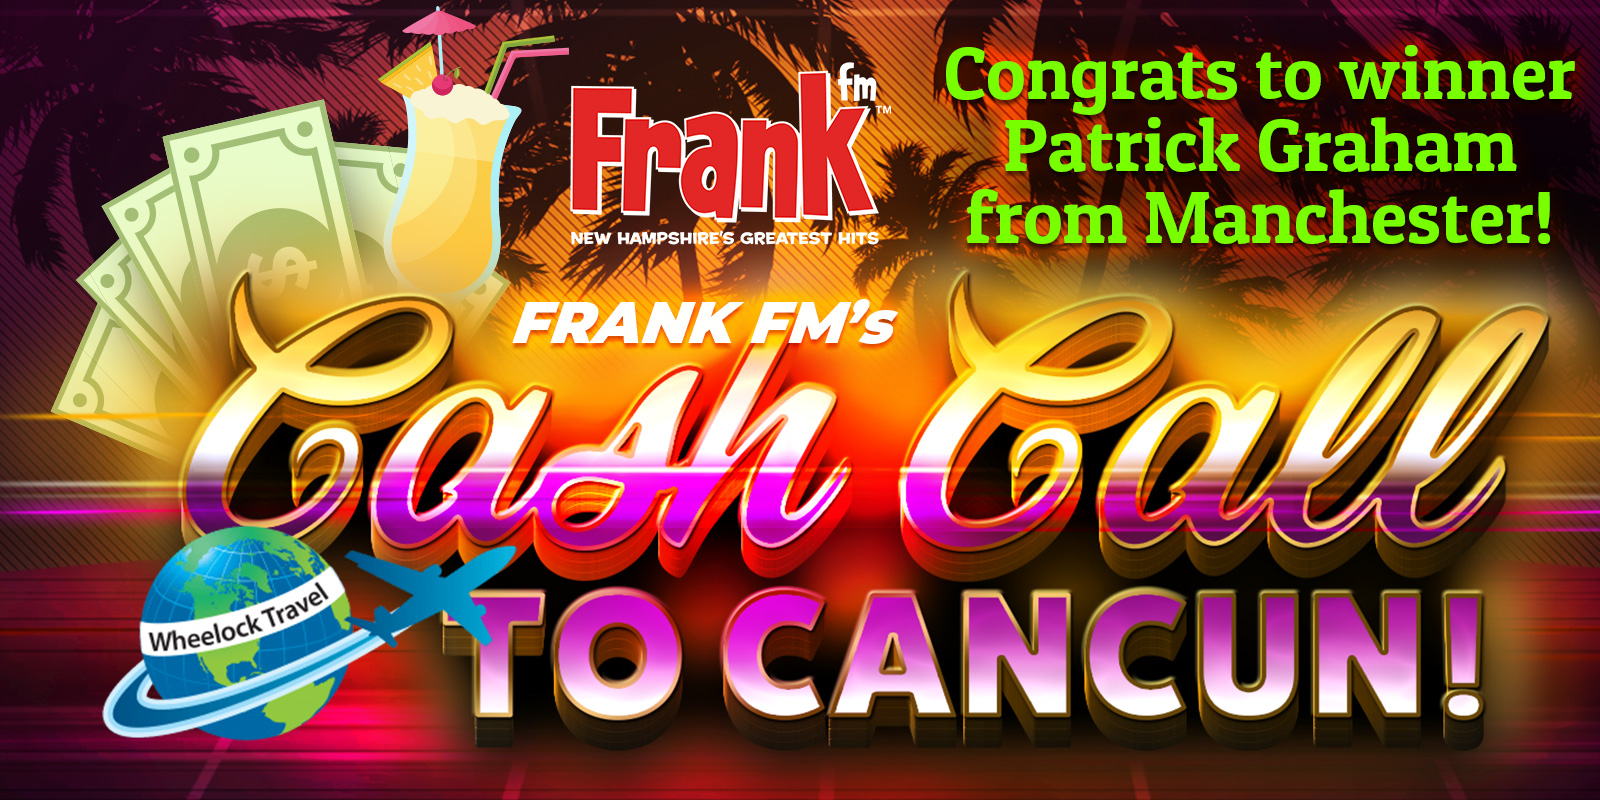 Frank FM’s Cash Call to Cancun